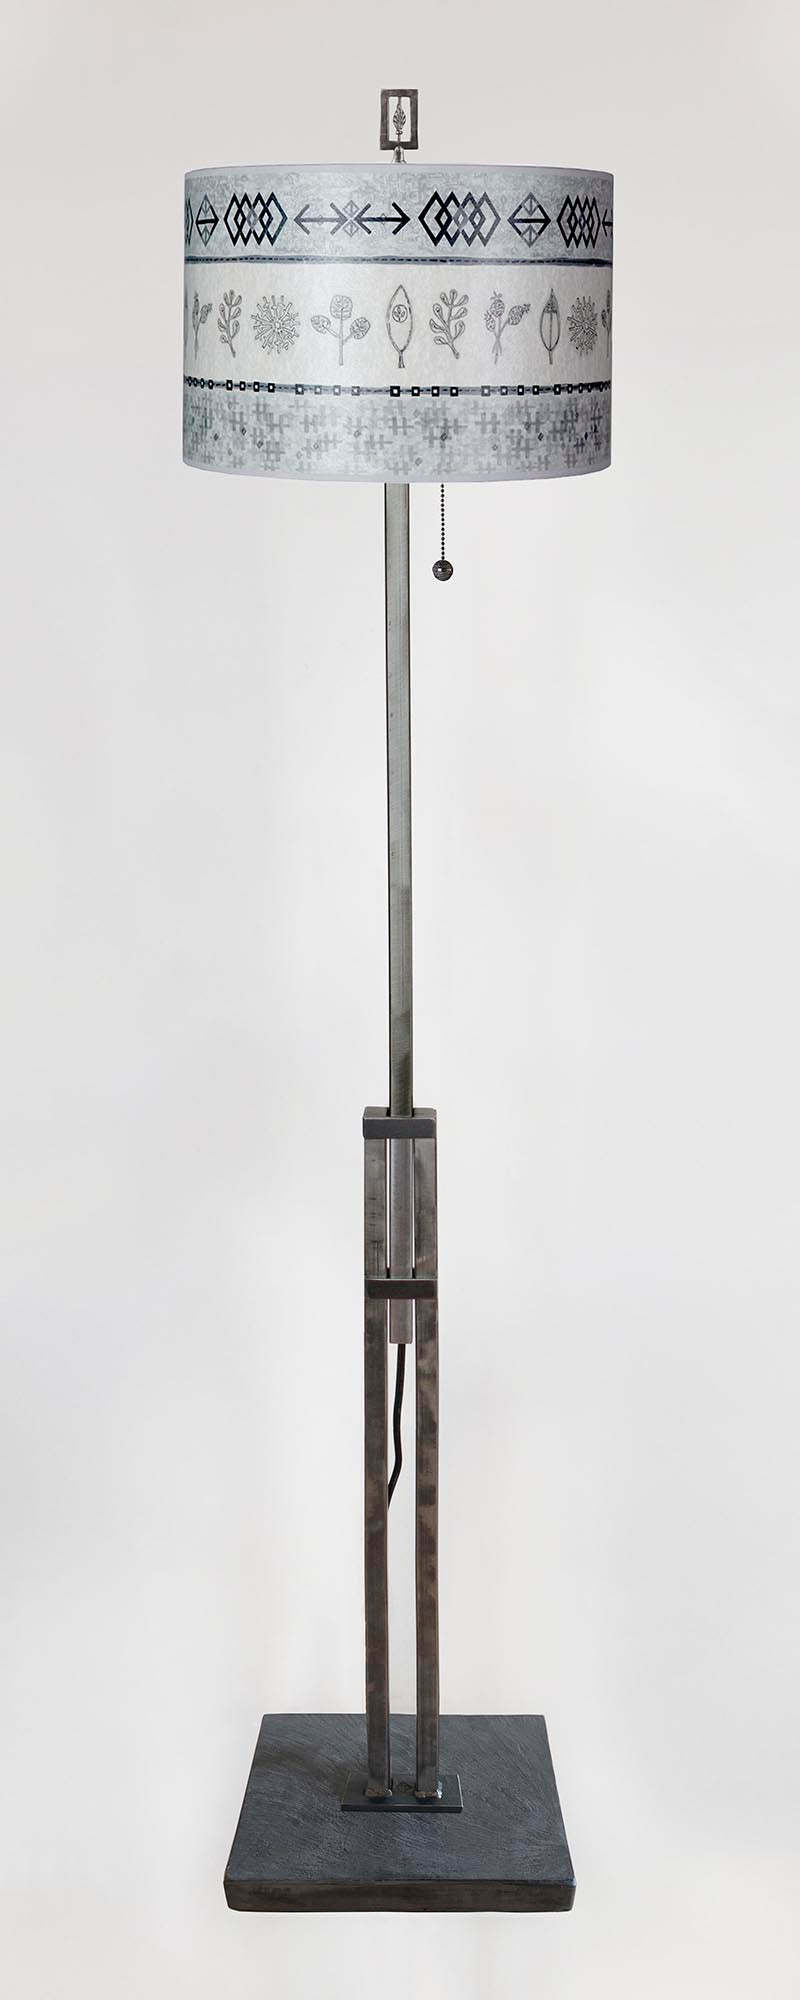 Janna Ugone & Co Floor Lamps Adjustable-Height Steel Floor Lamp with Large Drum Shade in Woven & Sprig in Mist